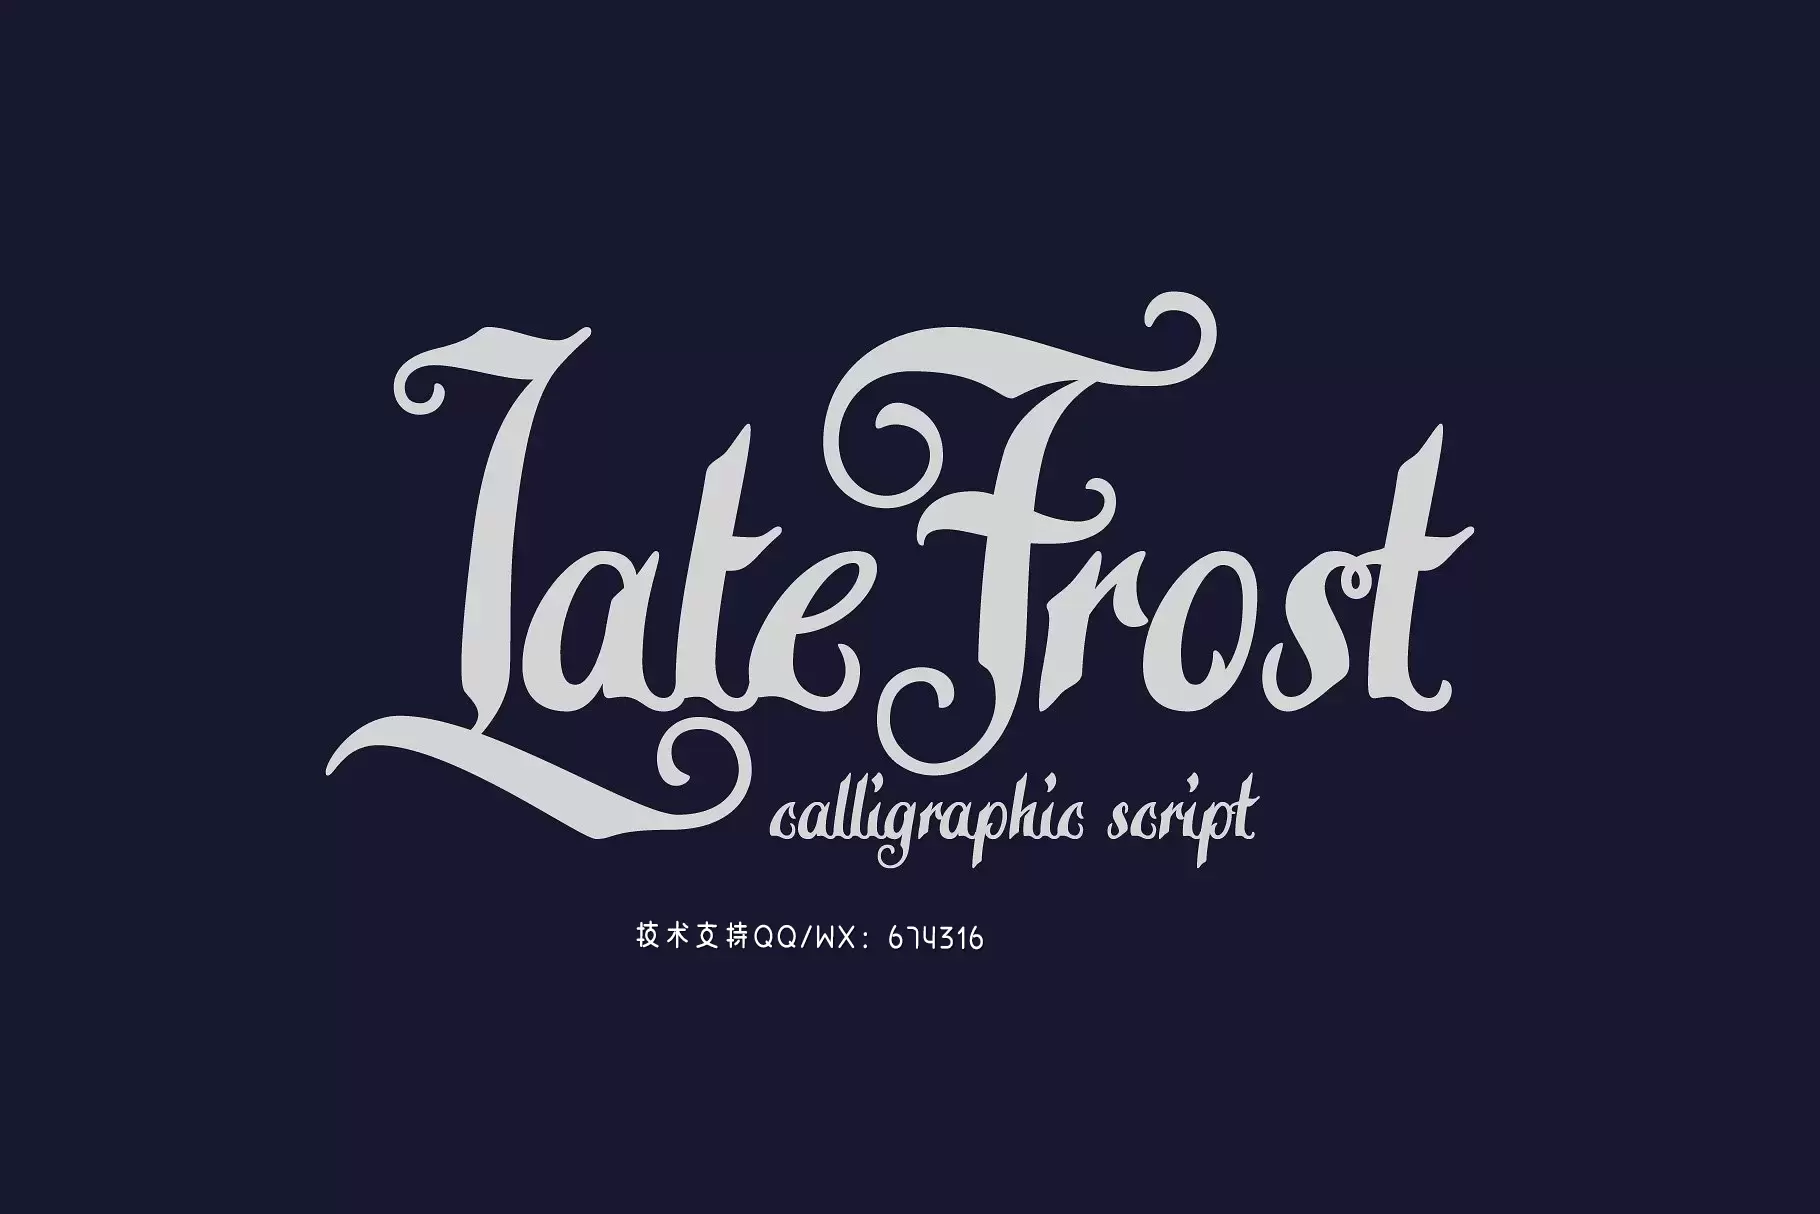 复古个性字体 Calligraphic script "Late Frost"插图